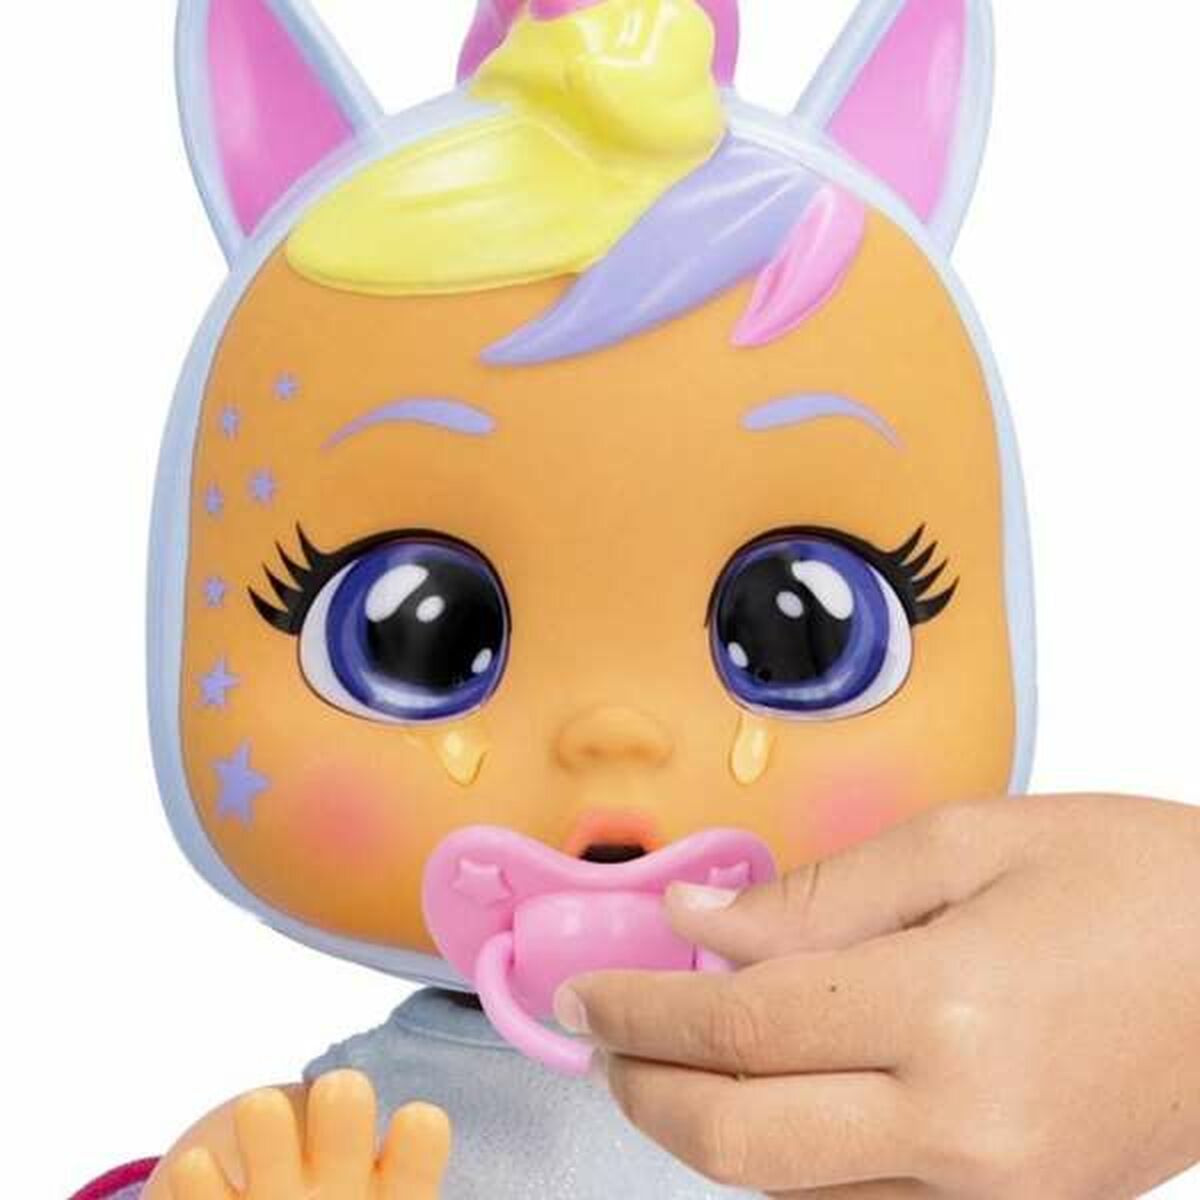 Baby Doll IMC Toys Jenna Cry Babies 13,7 x 24,5 x 28 cm